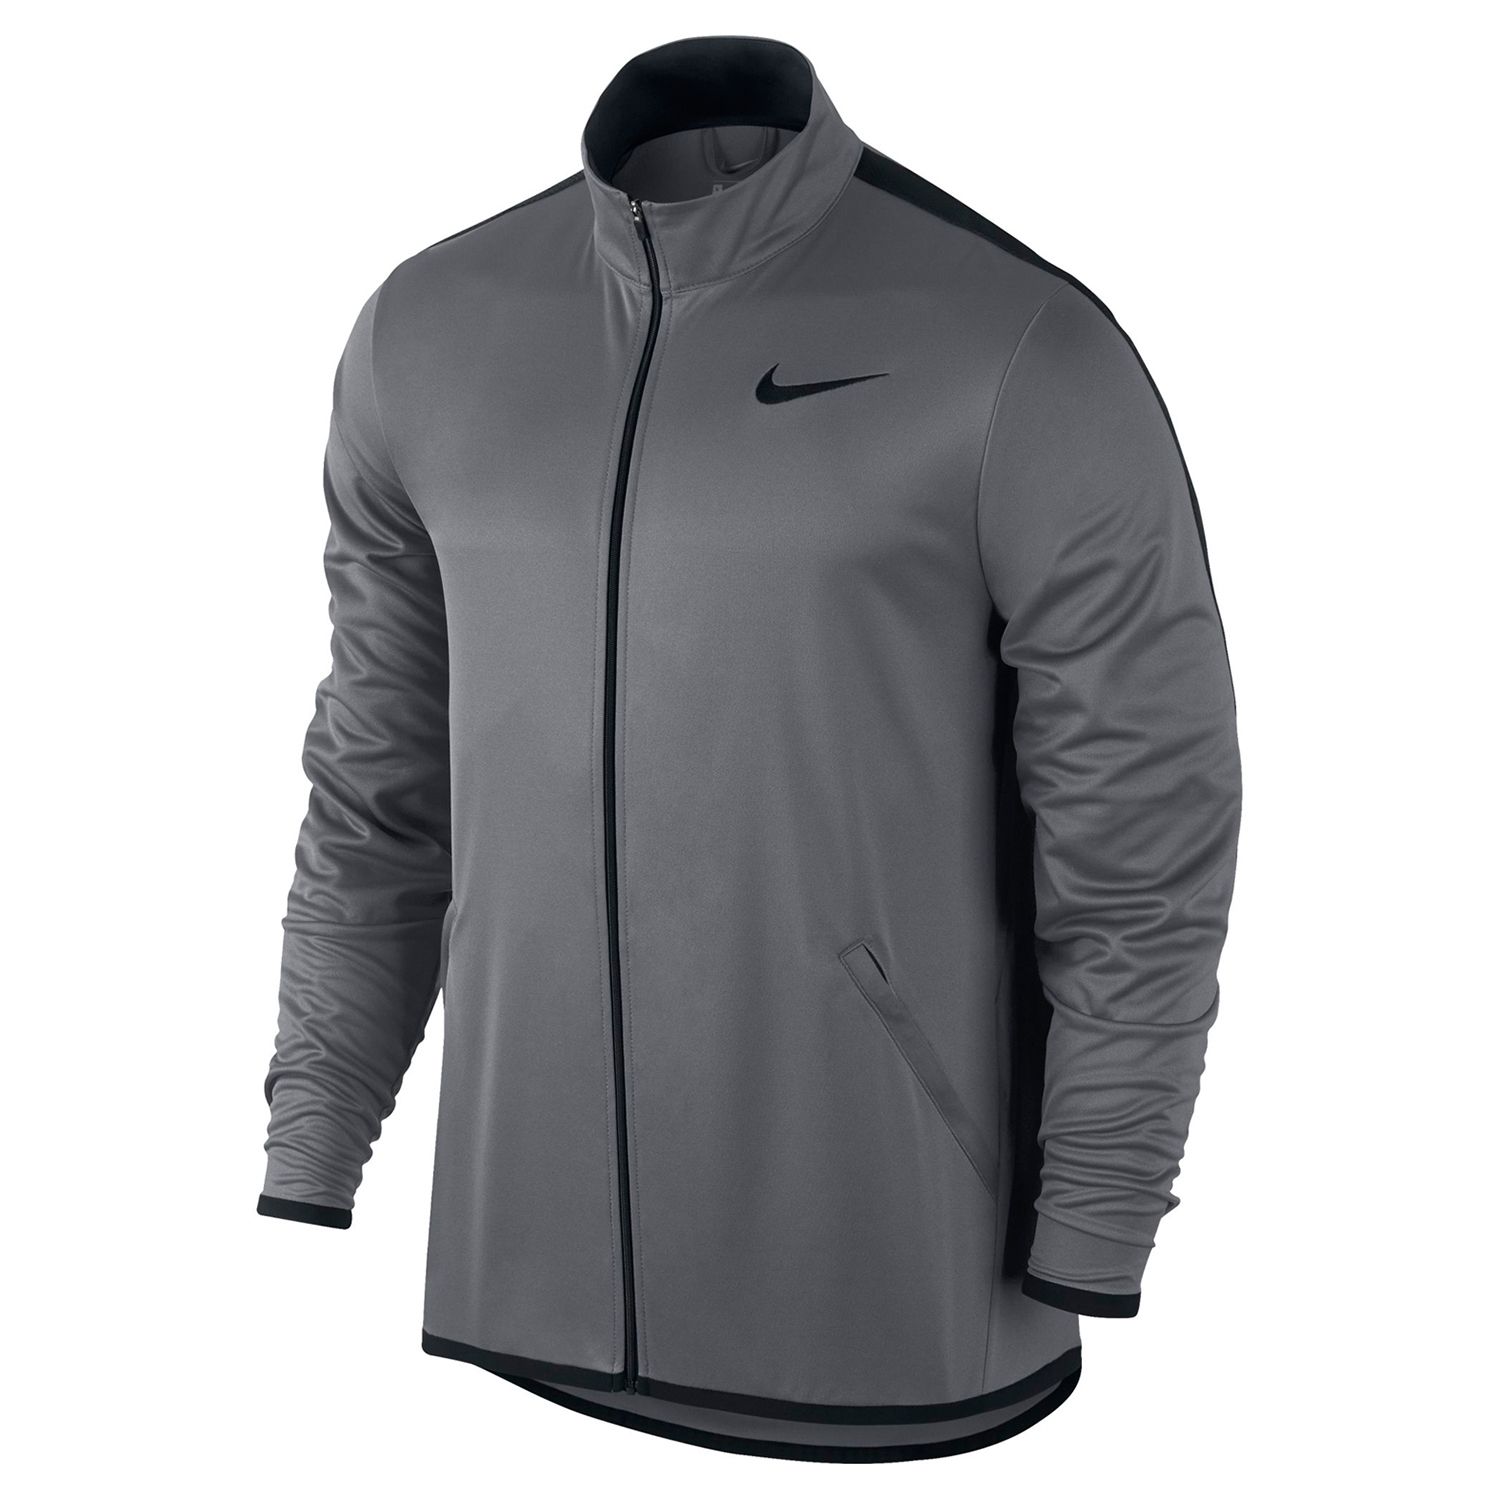 Men's Nike Epic Jacket